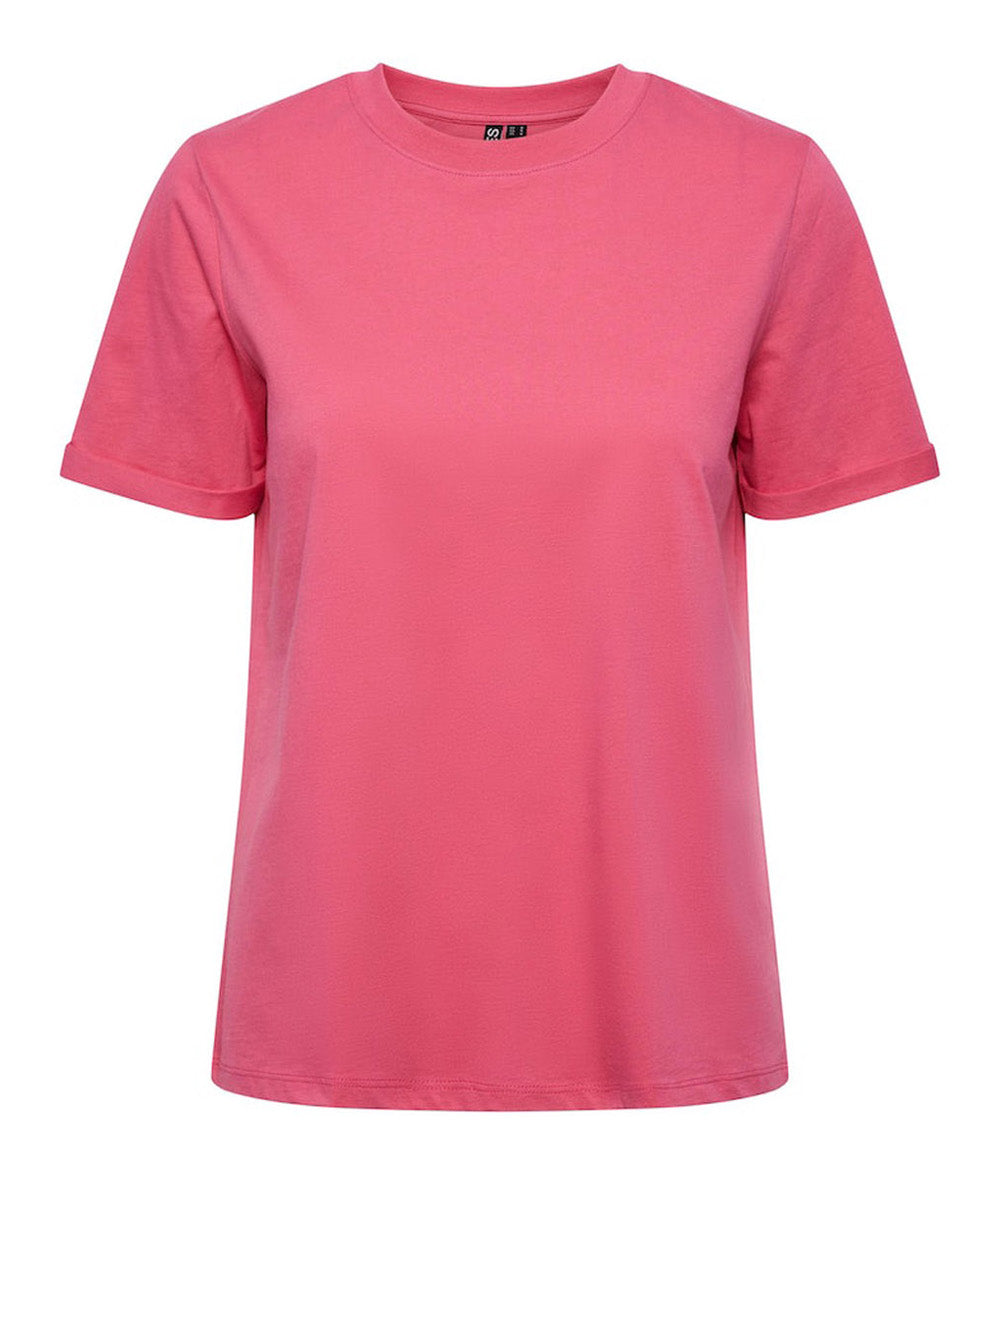 PIECES T-shirt Donna - Rosa modello 17086970